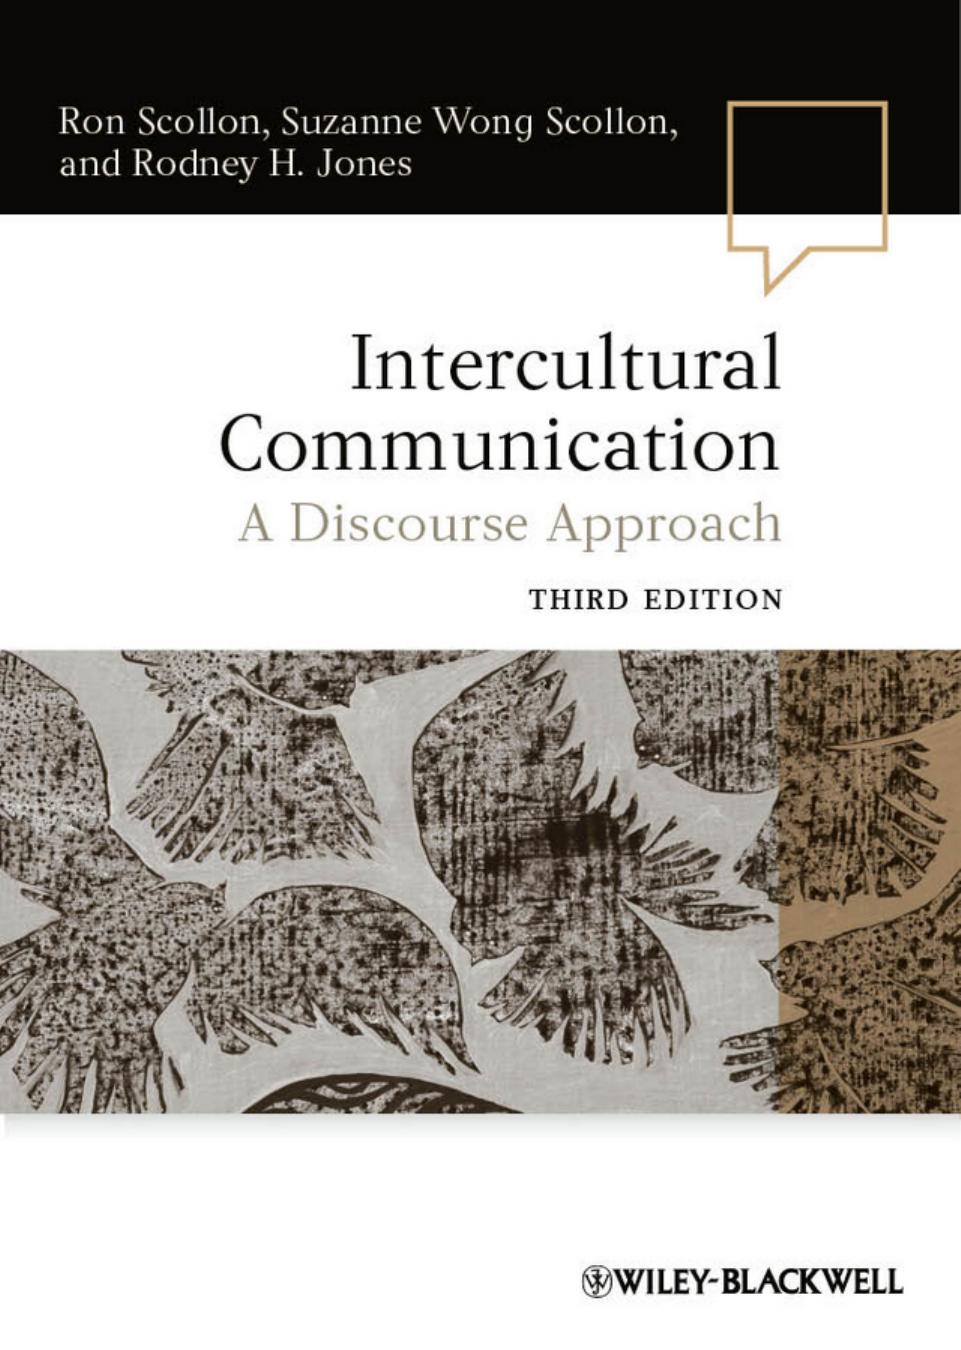 (eBook PDF)Intercultural Communication: A Discourse Approach 3rd Edition by Ron Scollon,Suzanne Wong Scollon